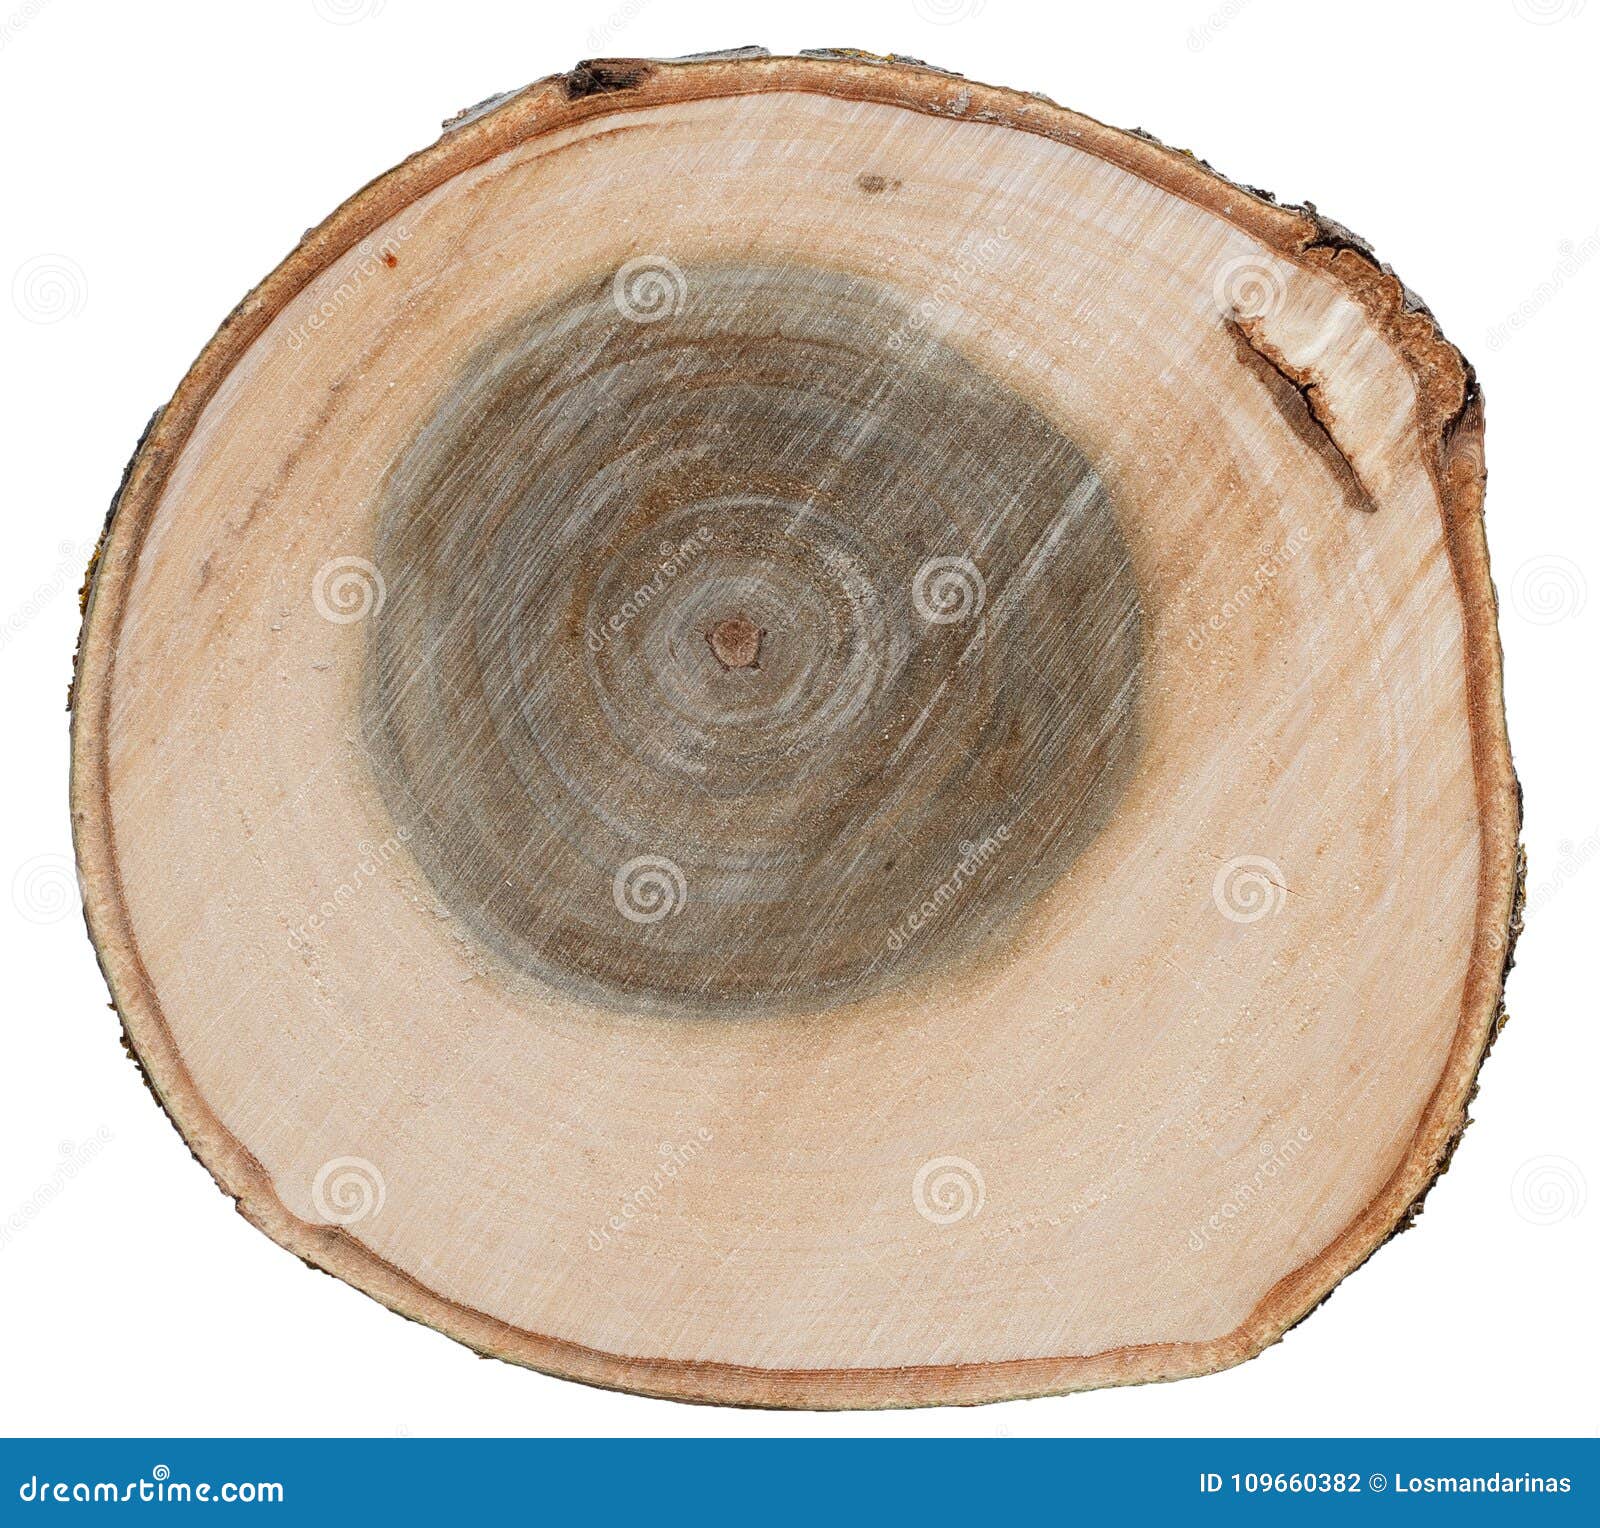 Cross cut tree trunk